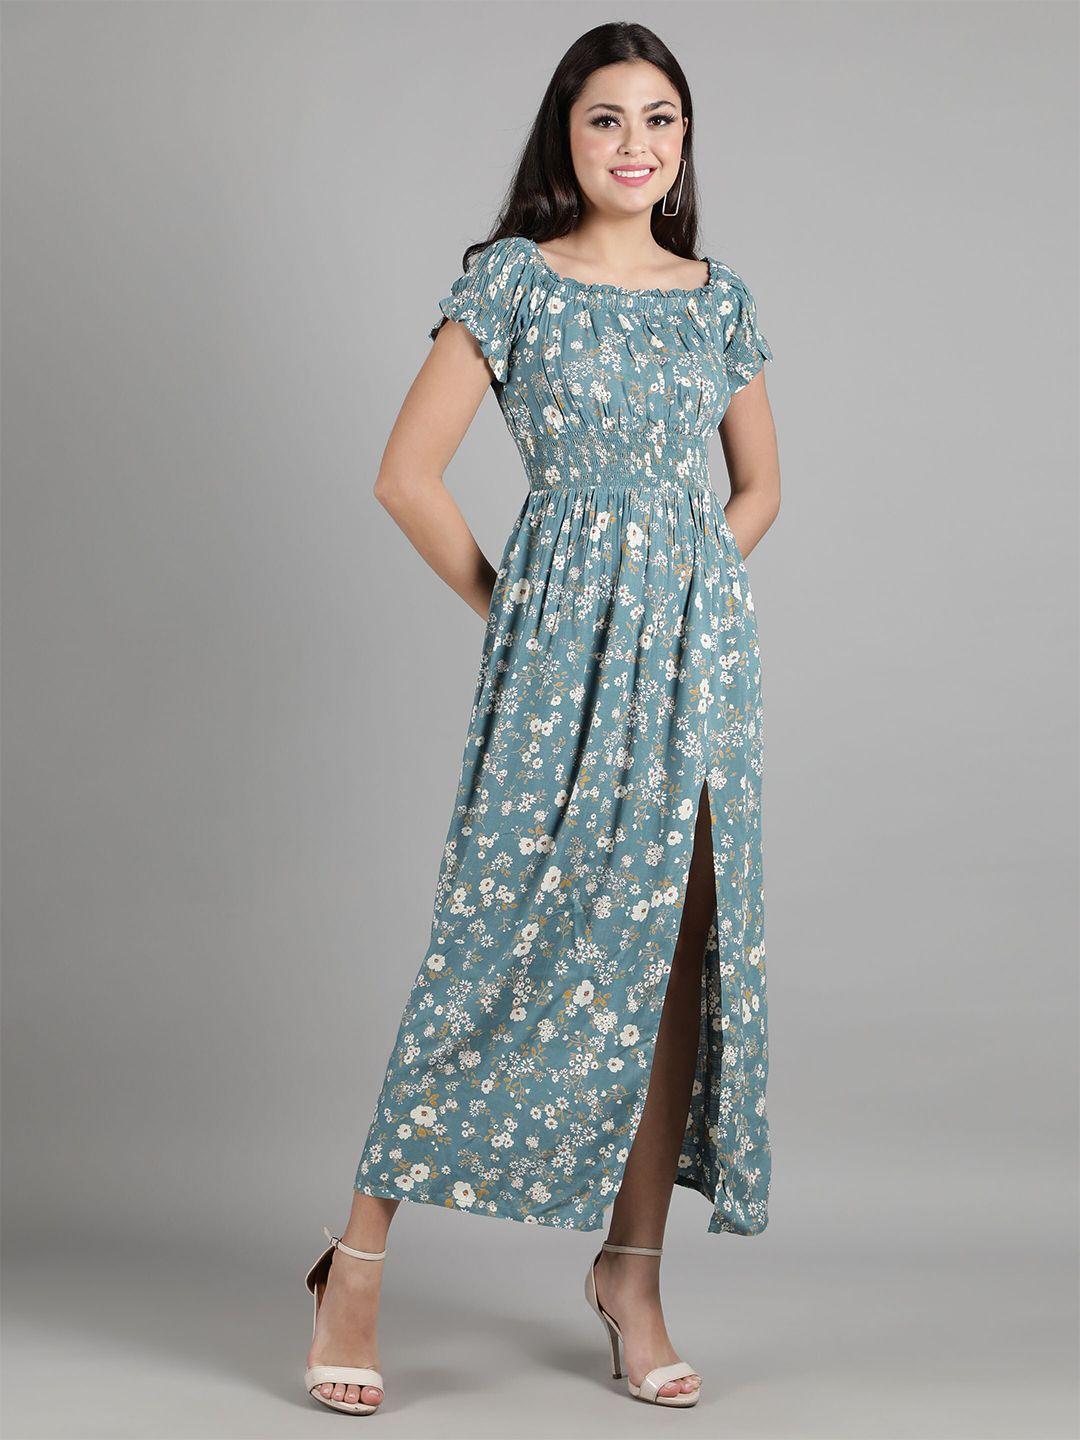 debonatella women teal floral printed fit & flare slit dress